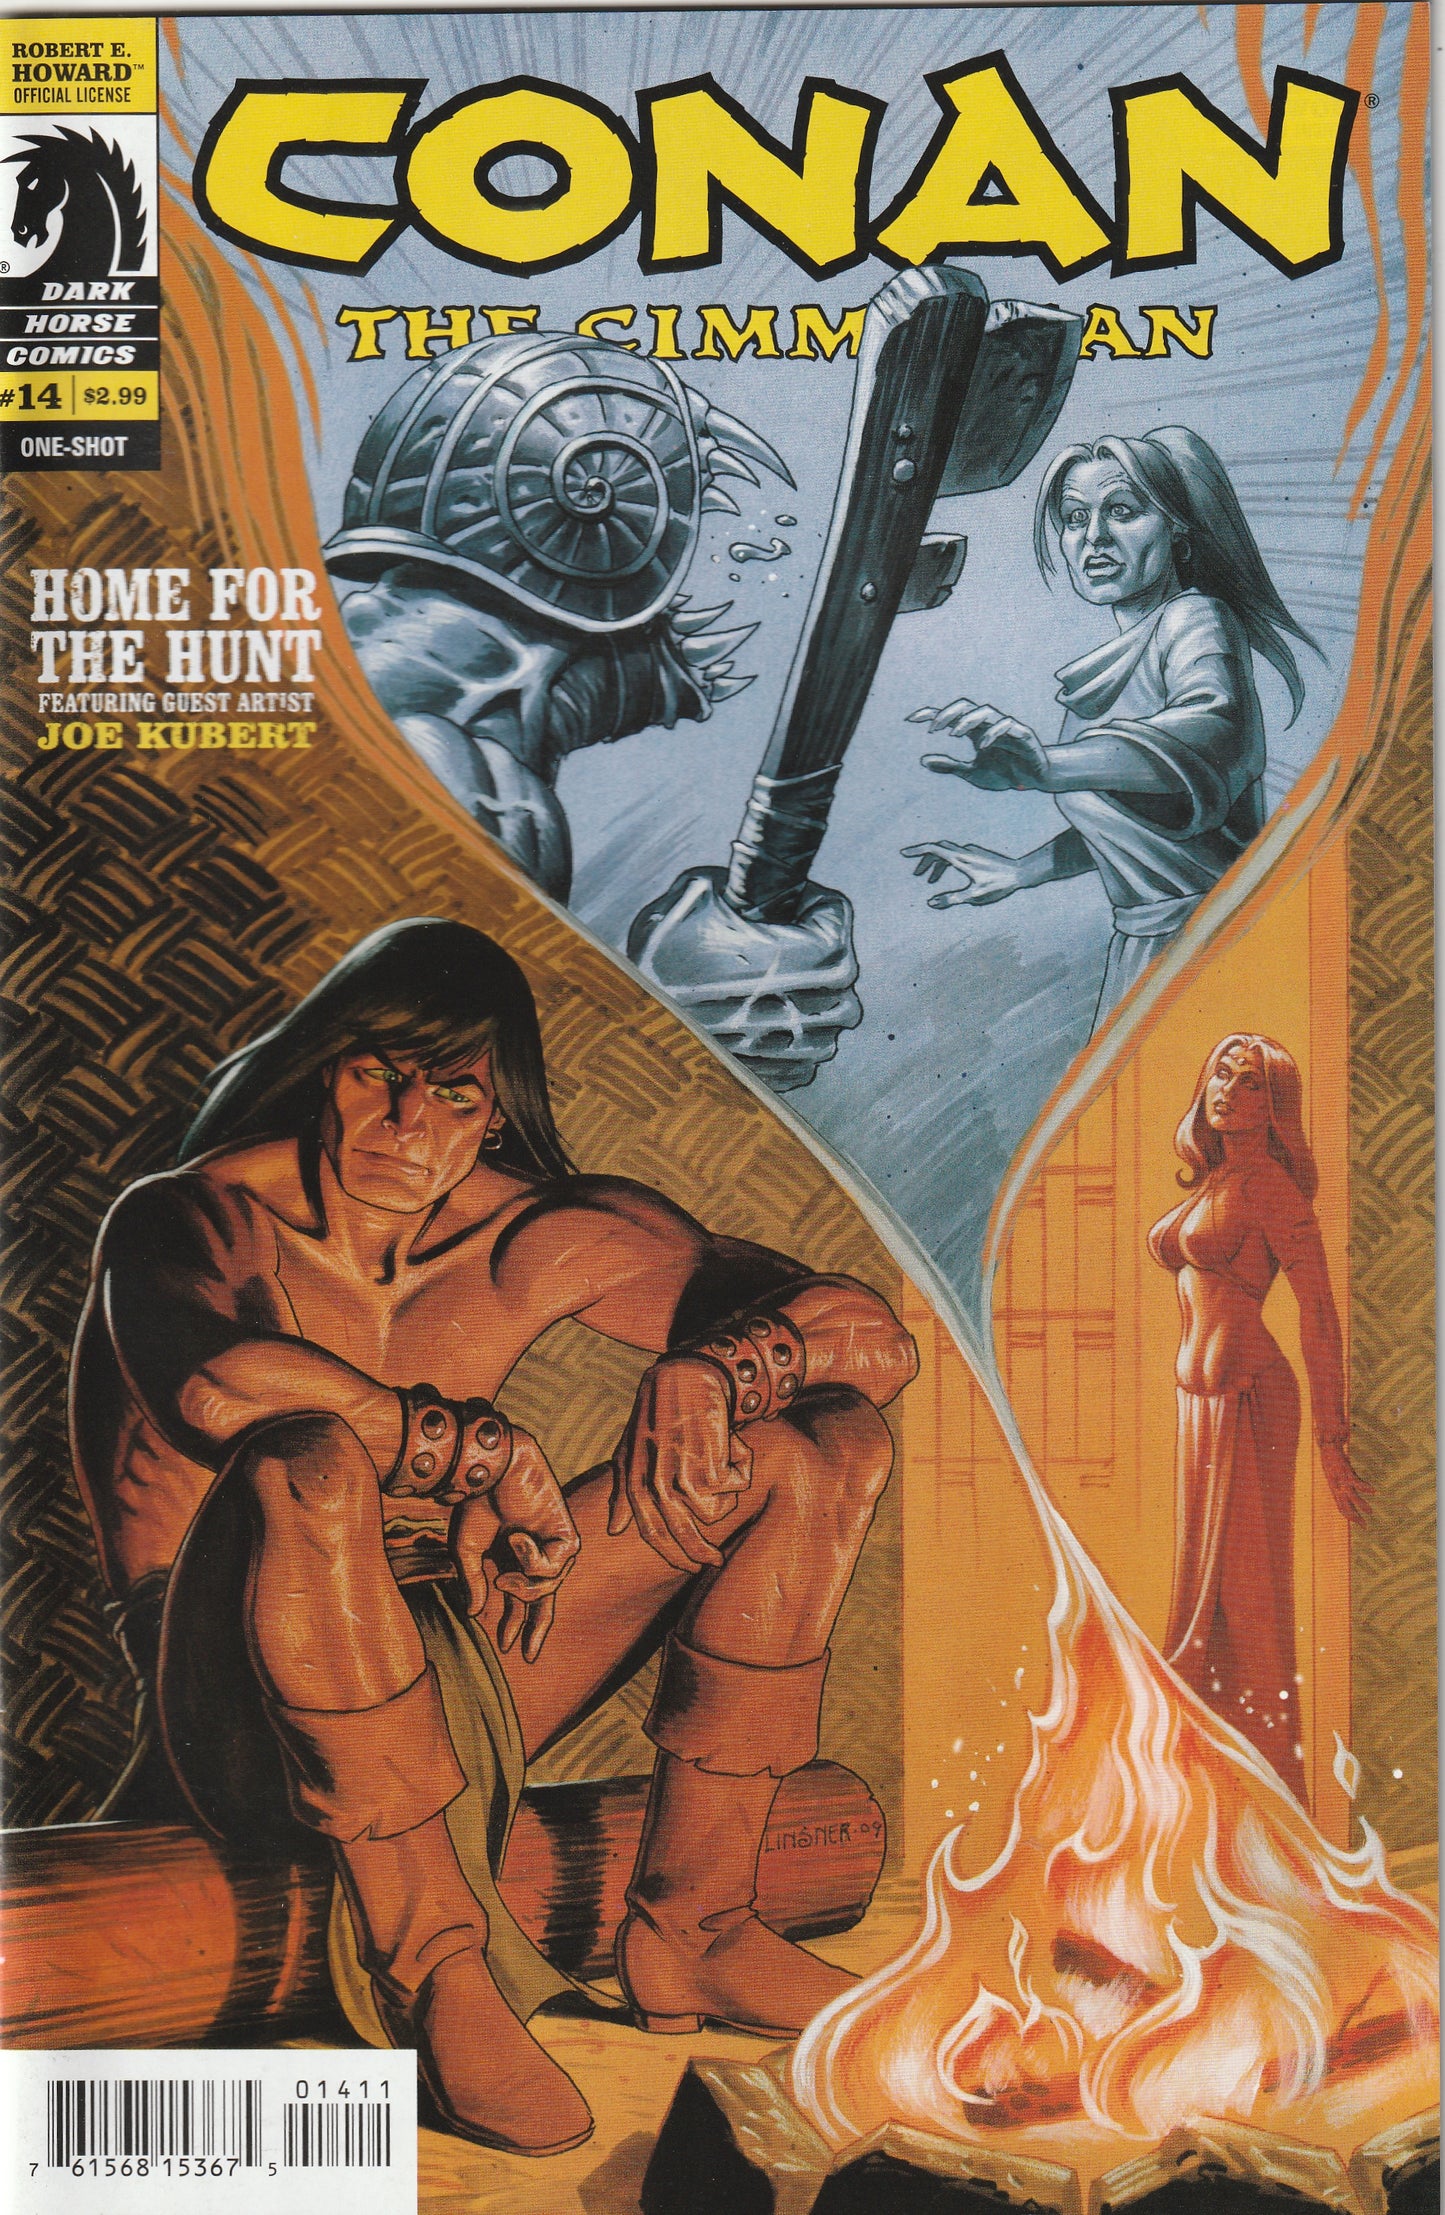 Conan The Cimmerian #14 (2009) - Joseph Michael Linsner cover